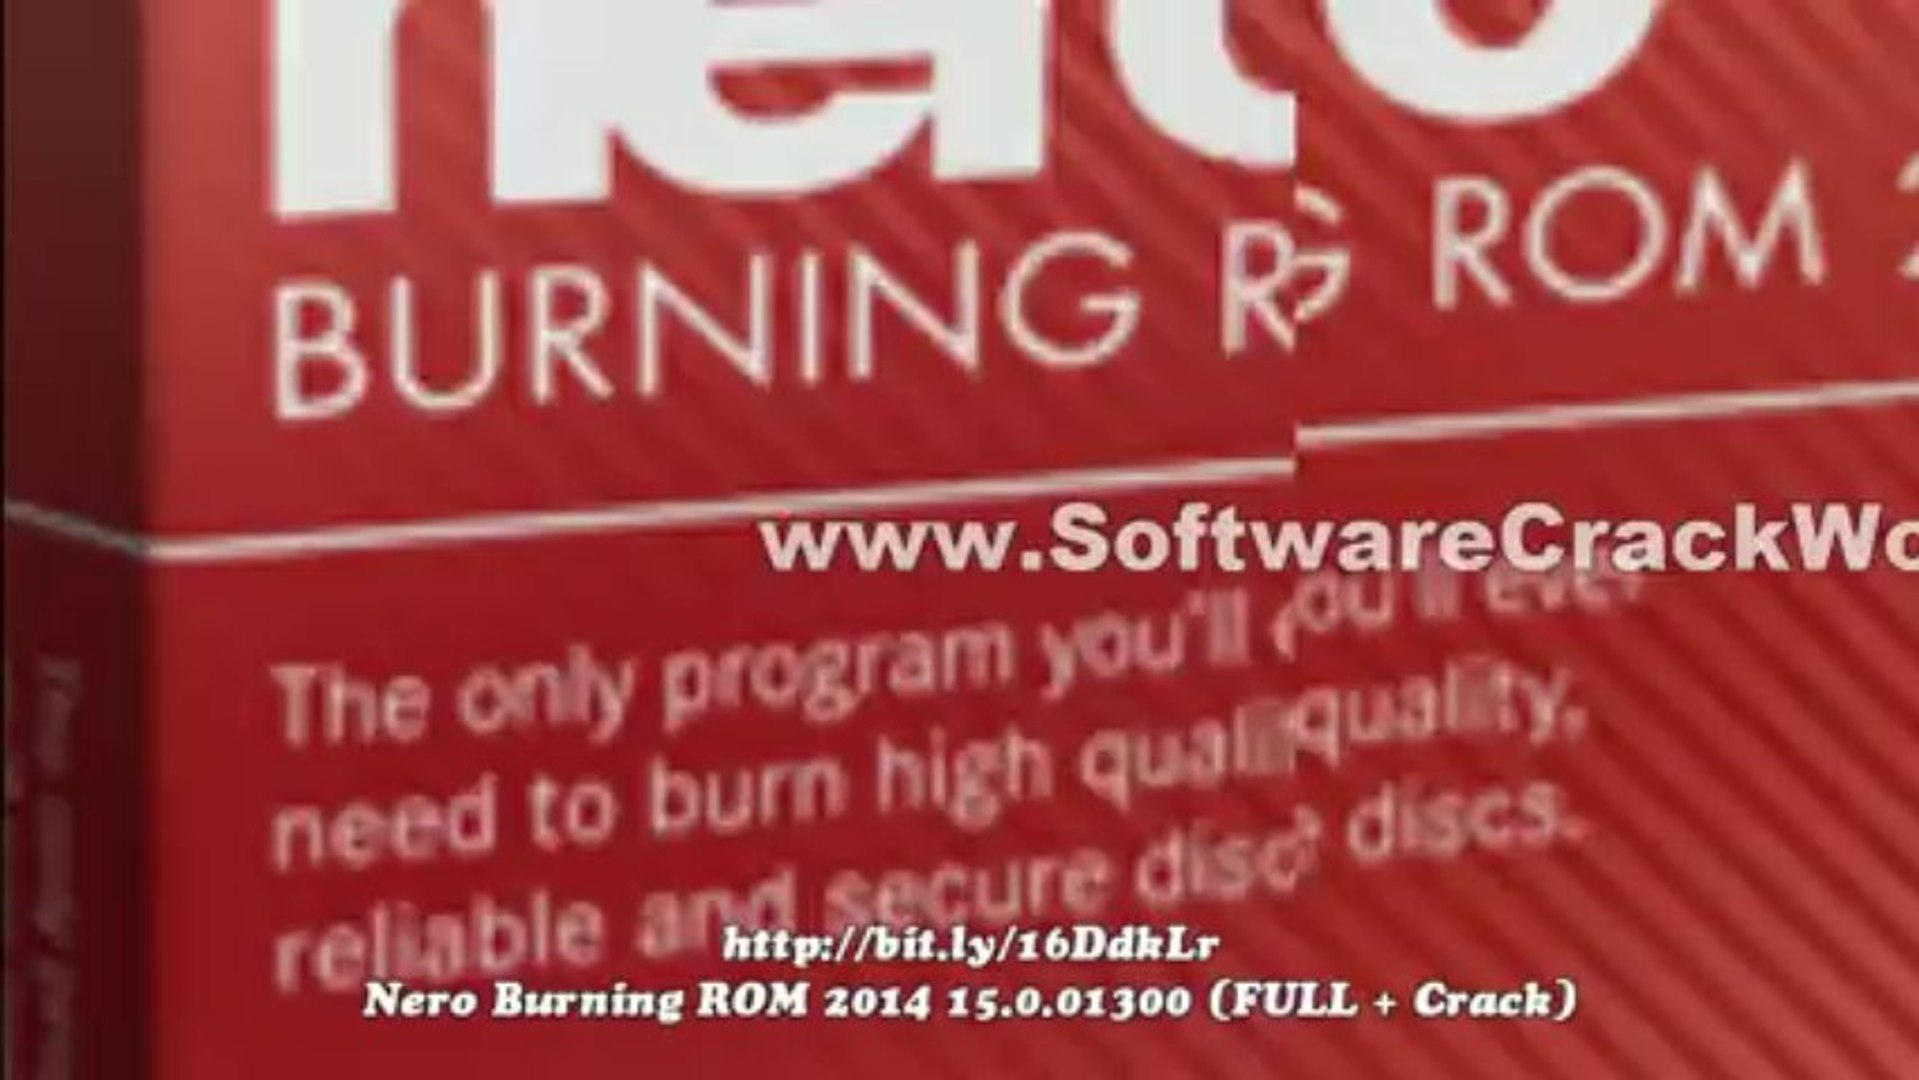 Nero burning rom full crack